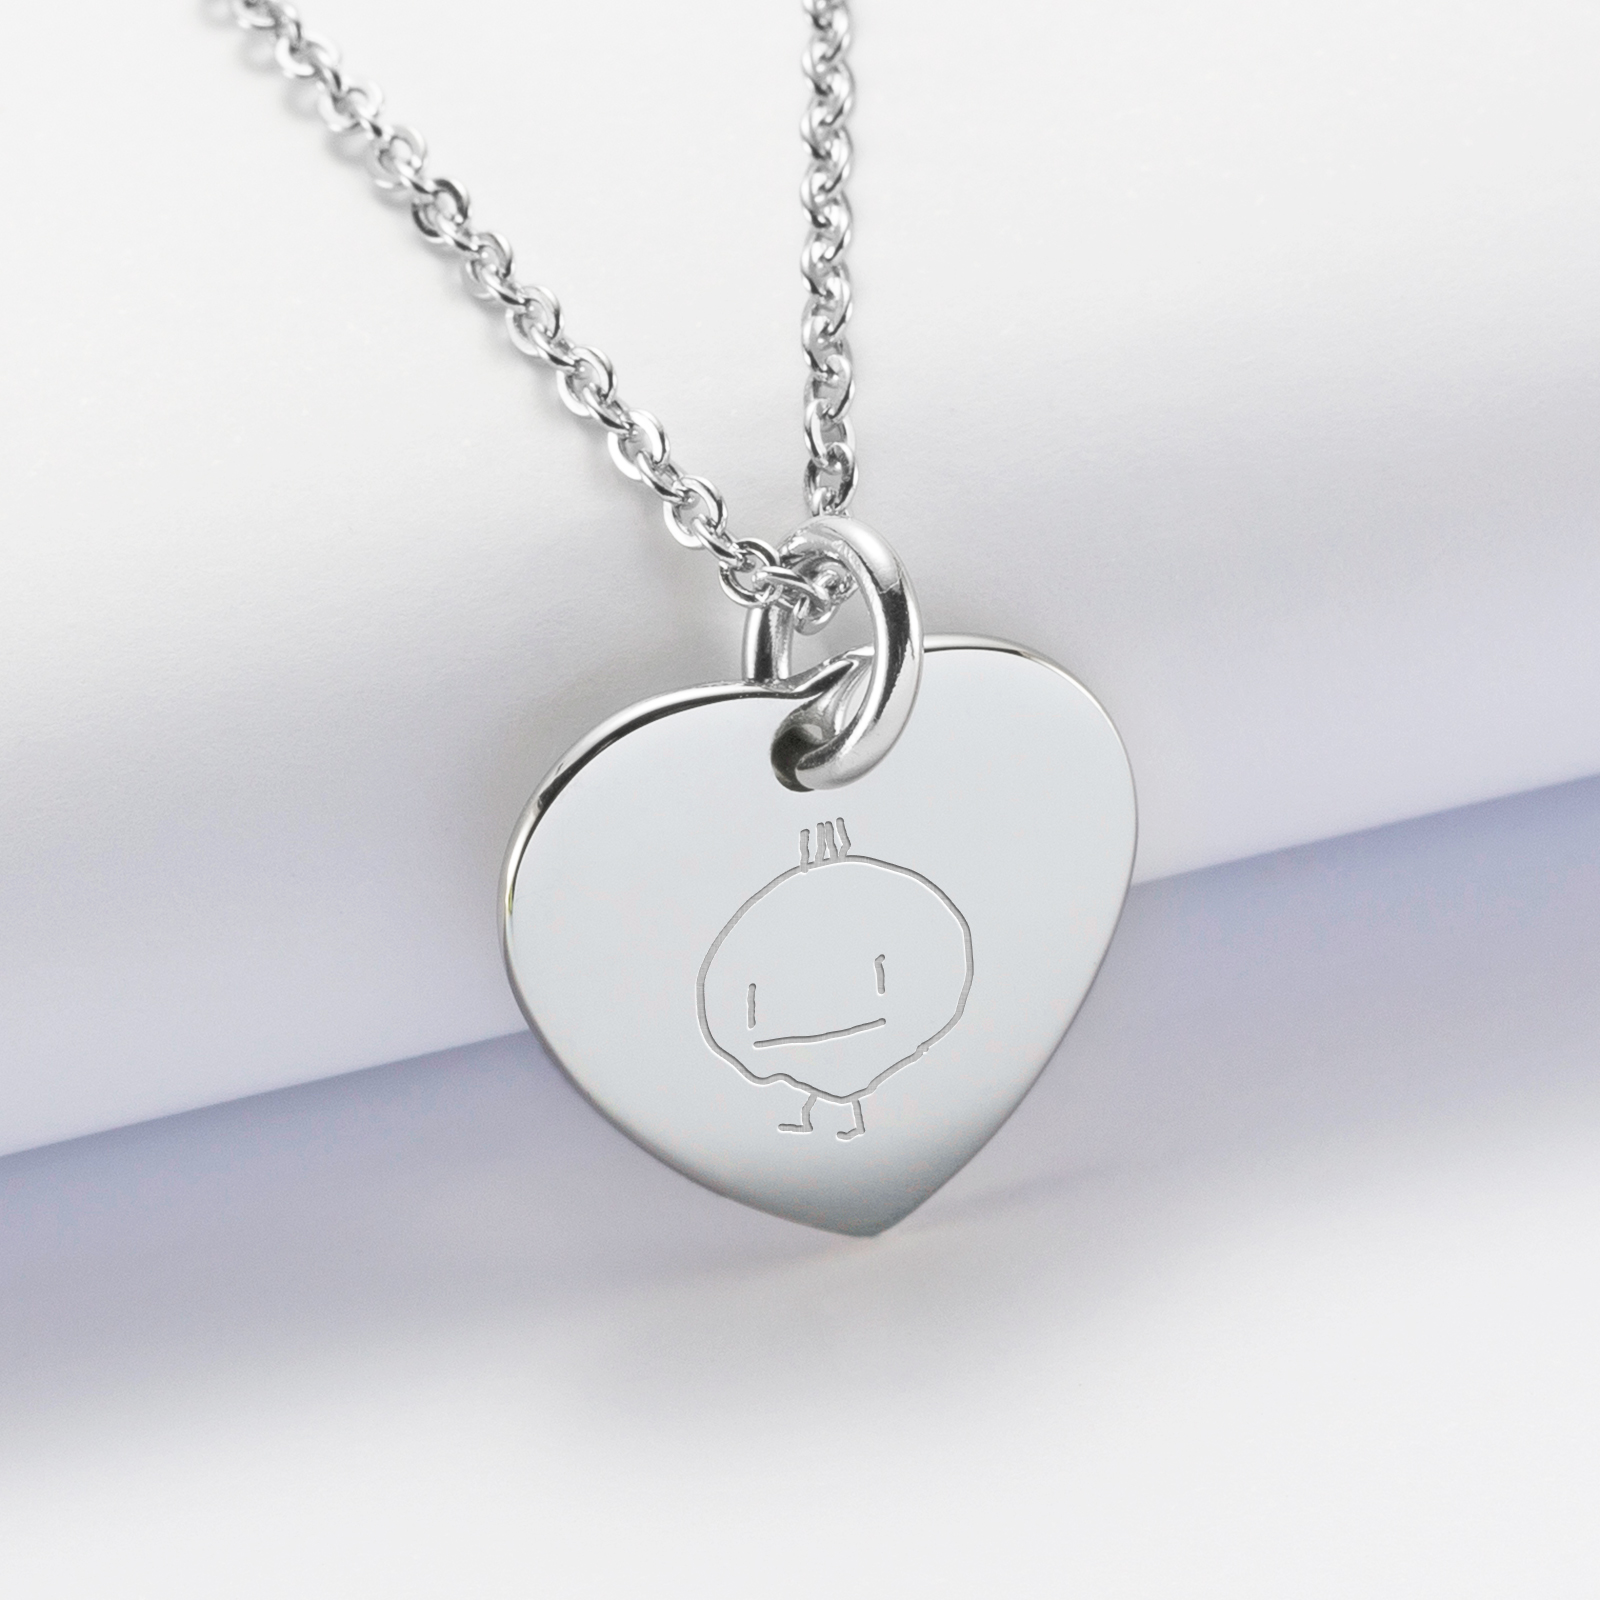 Personalised engraved steel heart medallion pendant 20x18mm - sketch